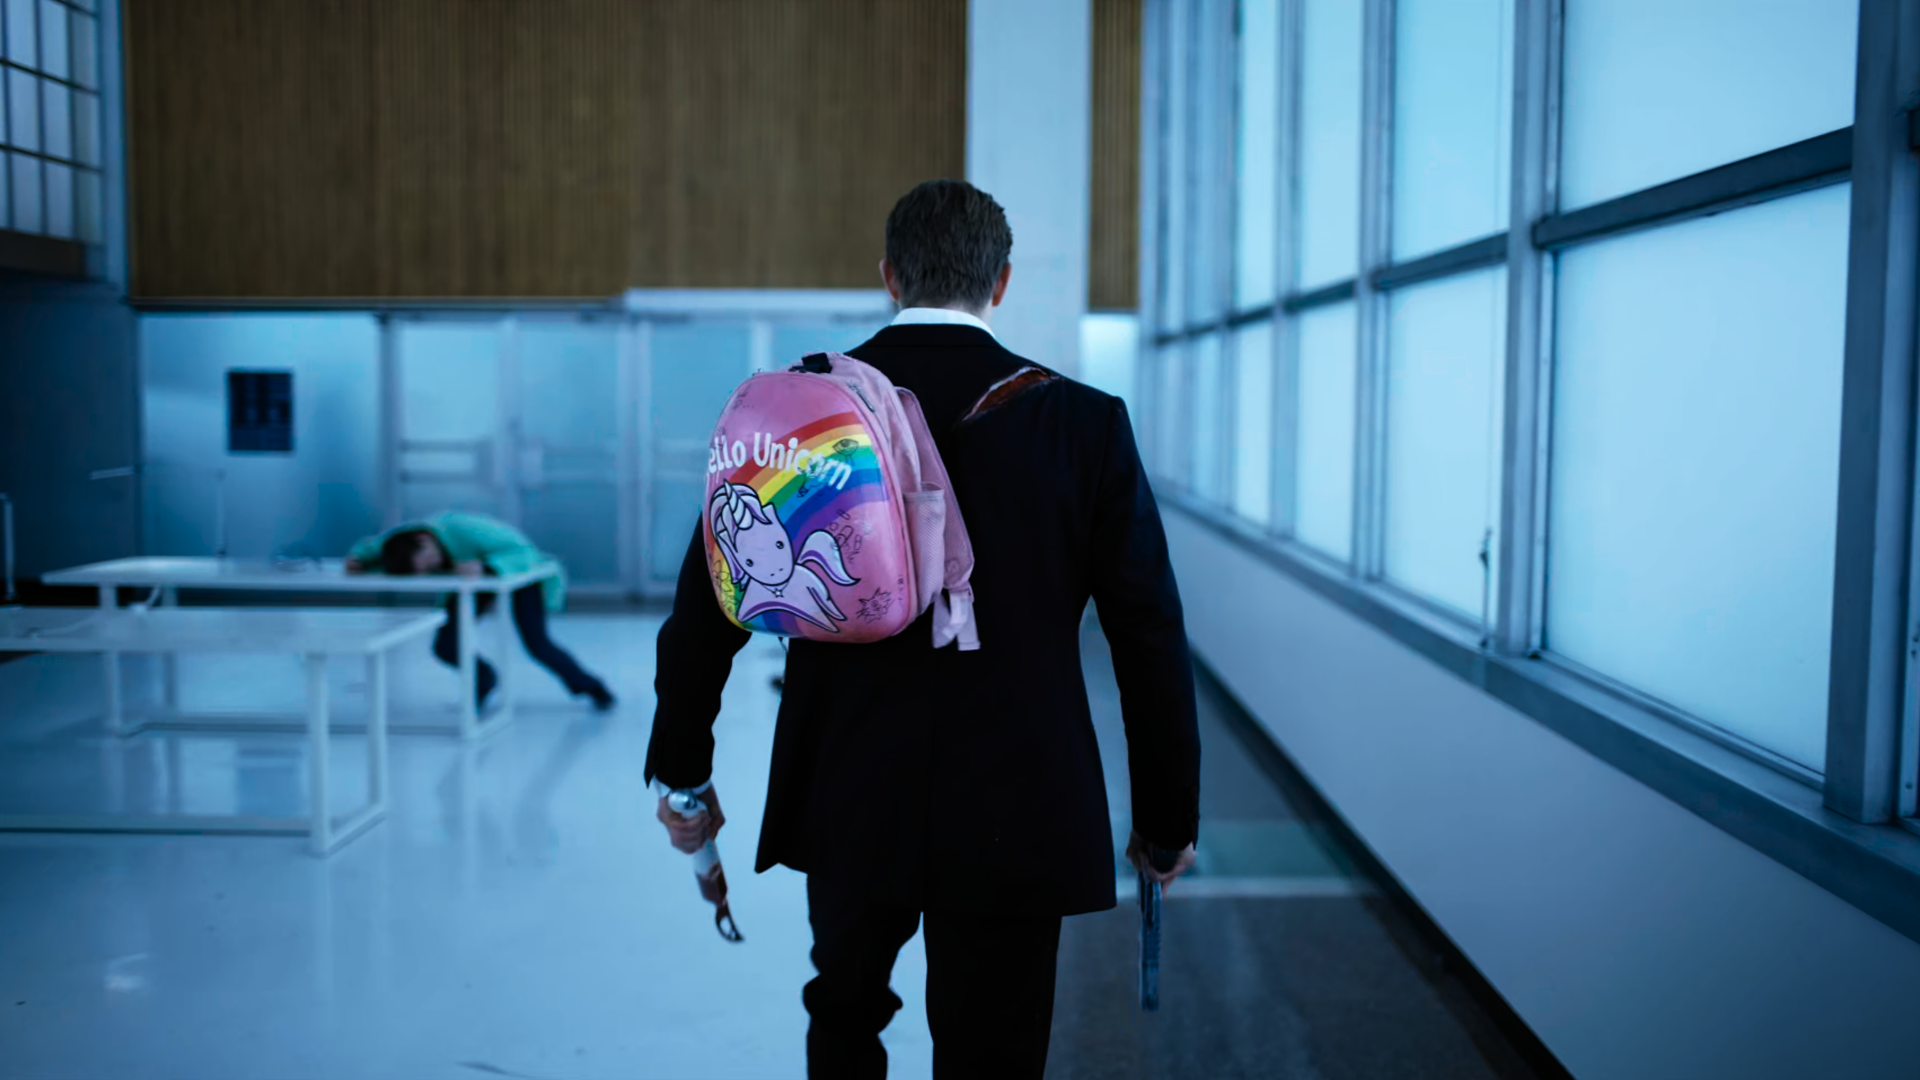 Takeshi Kovacs pink "Hello Unicorn" Bagpack